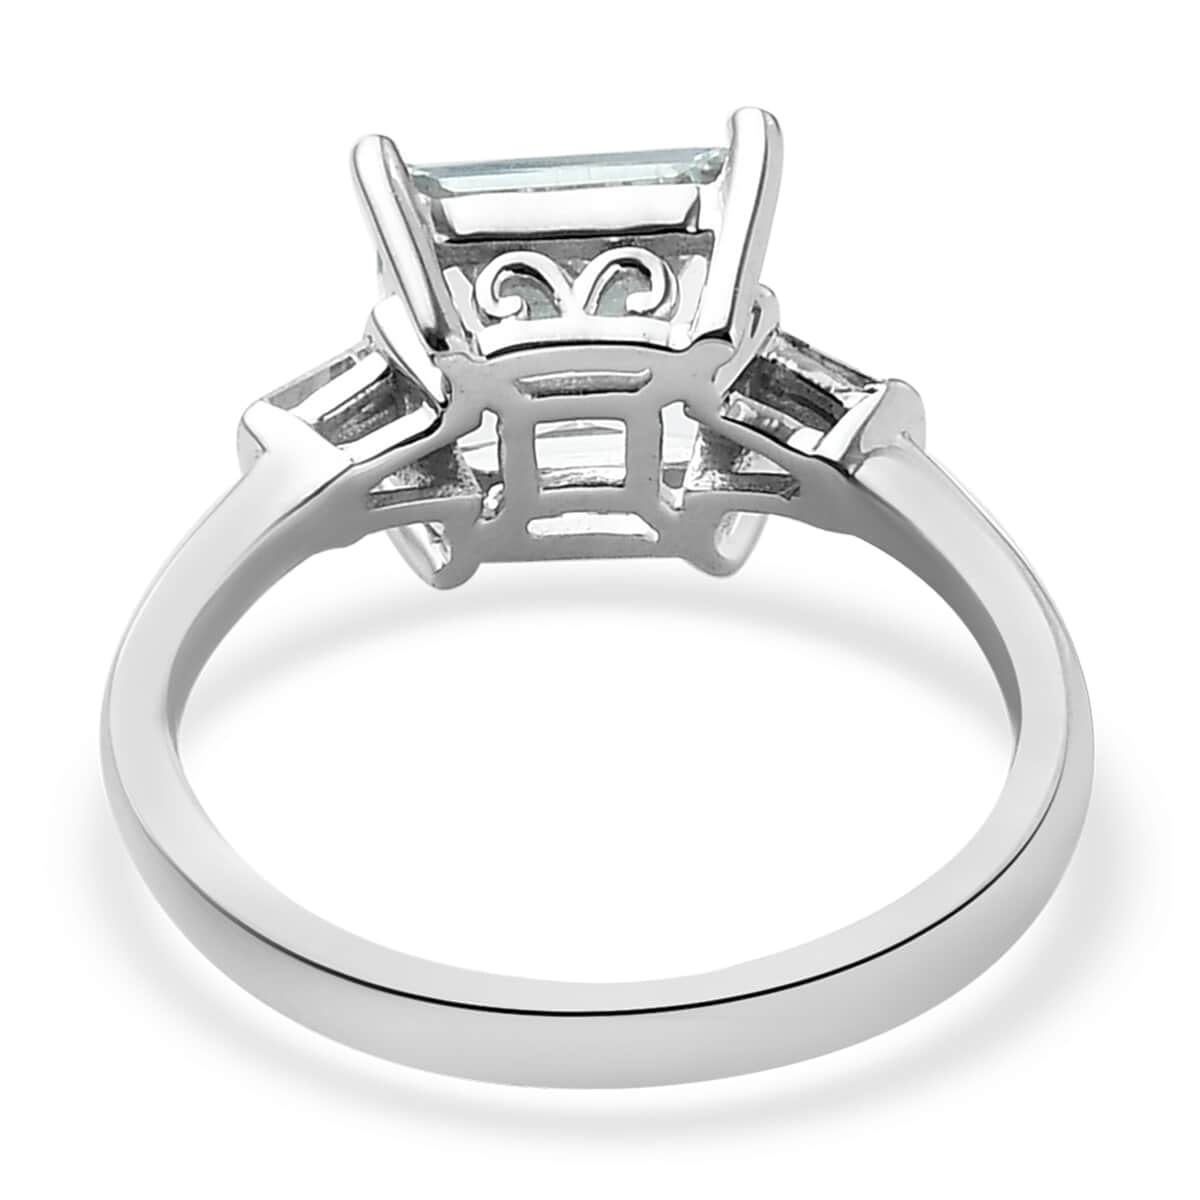 Luxoro 10K White Gold Premium Espirito Santo Aquamarine and Diamond Ring (Size 6.0) 2.65 Grams 2.25 ctw image number 4